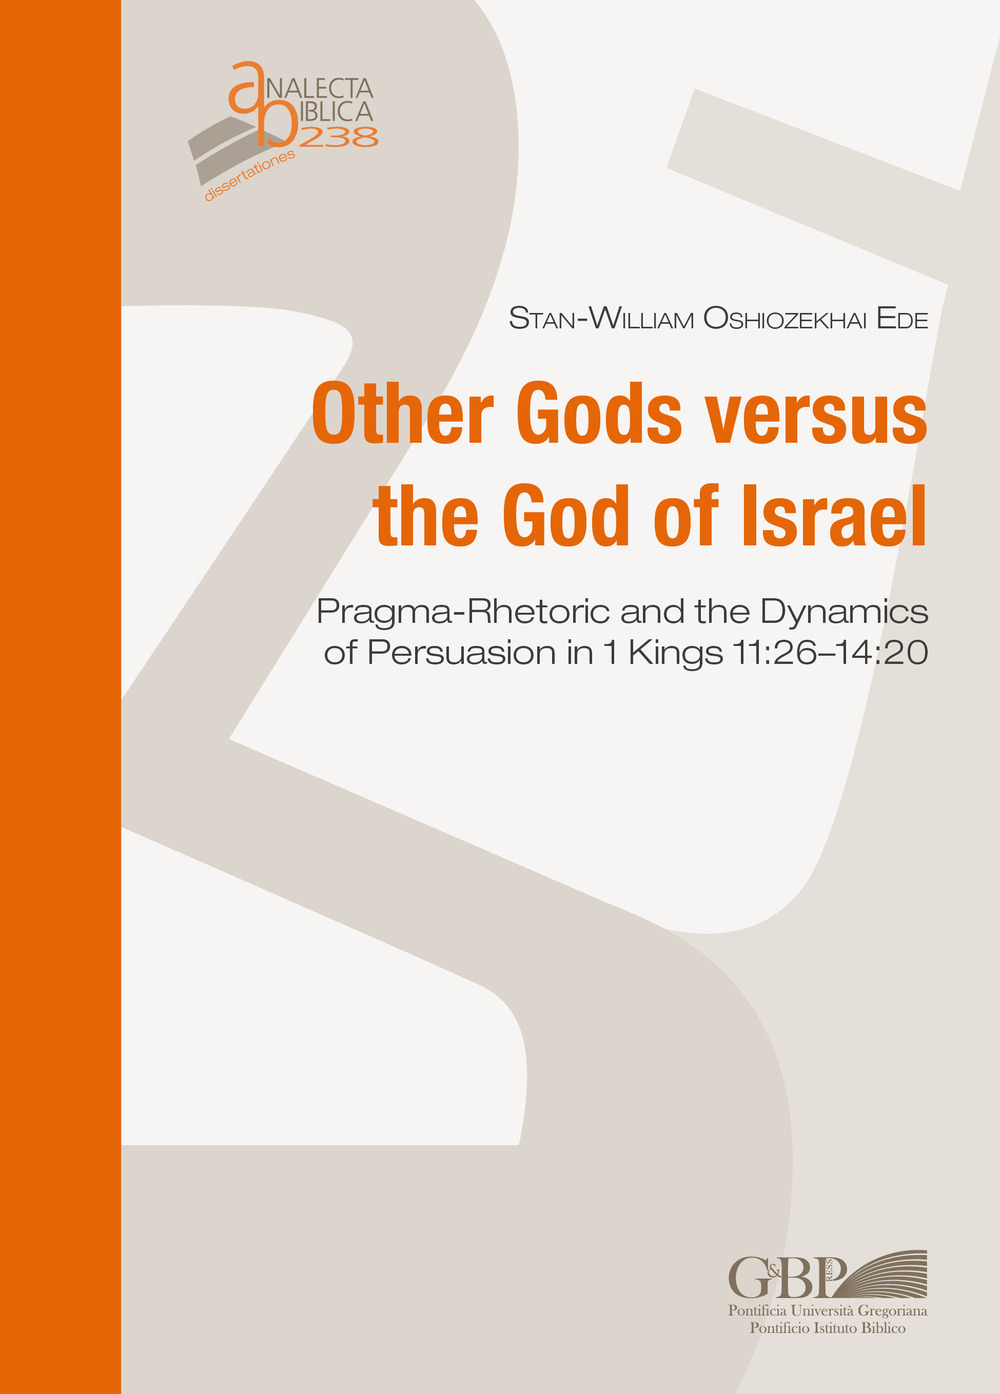 Other Gods versus the God of Israel. Pragma-rhetoric and dynamics of persuasion in 1 Kings 11:26-14:20